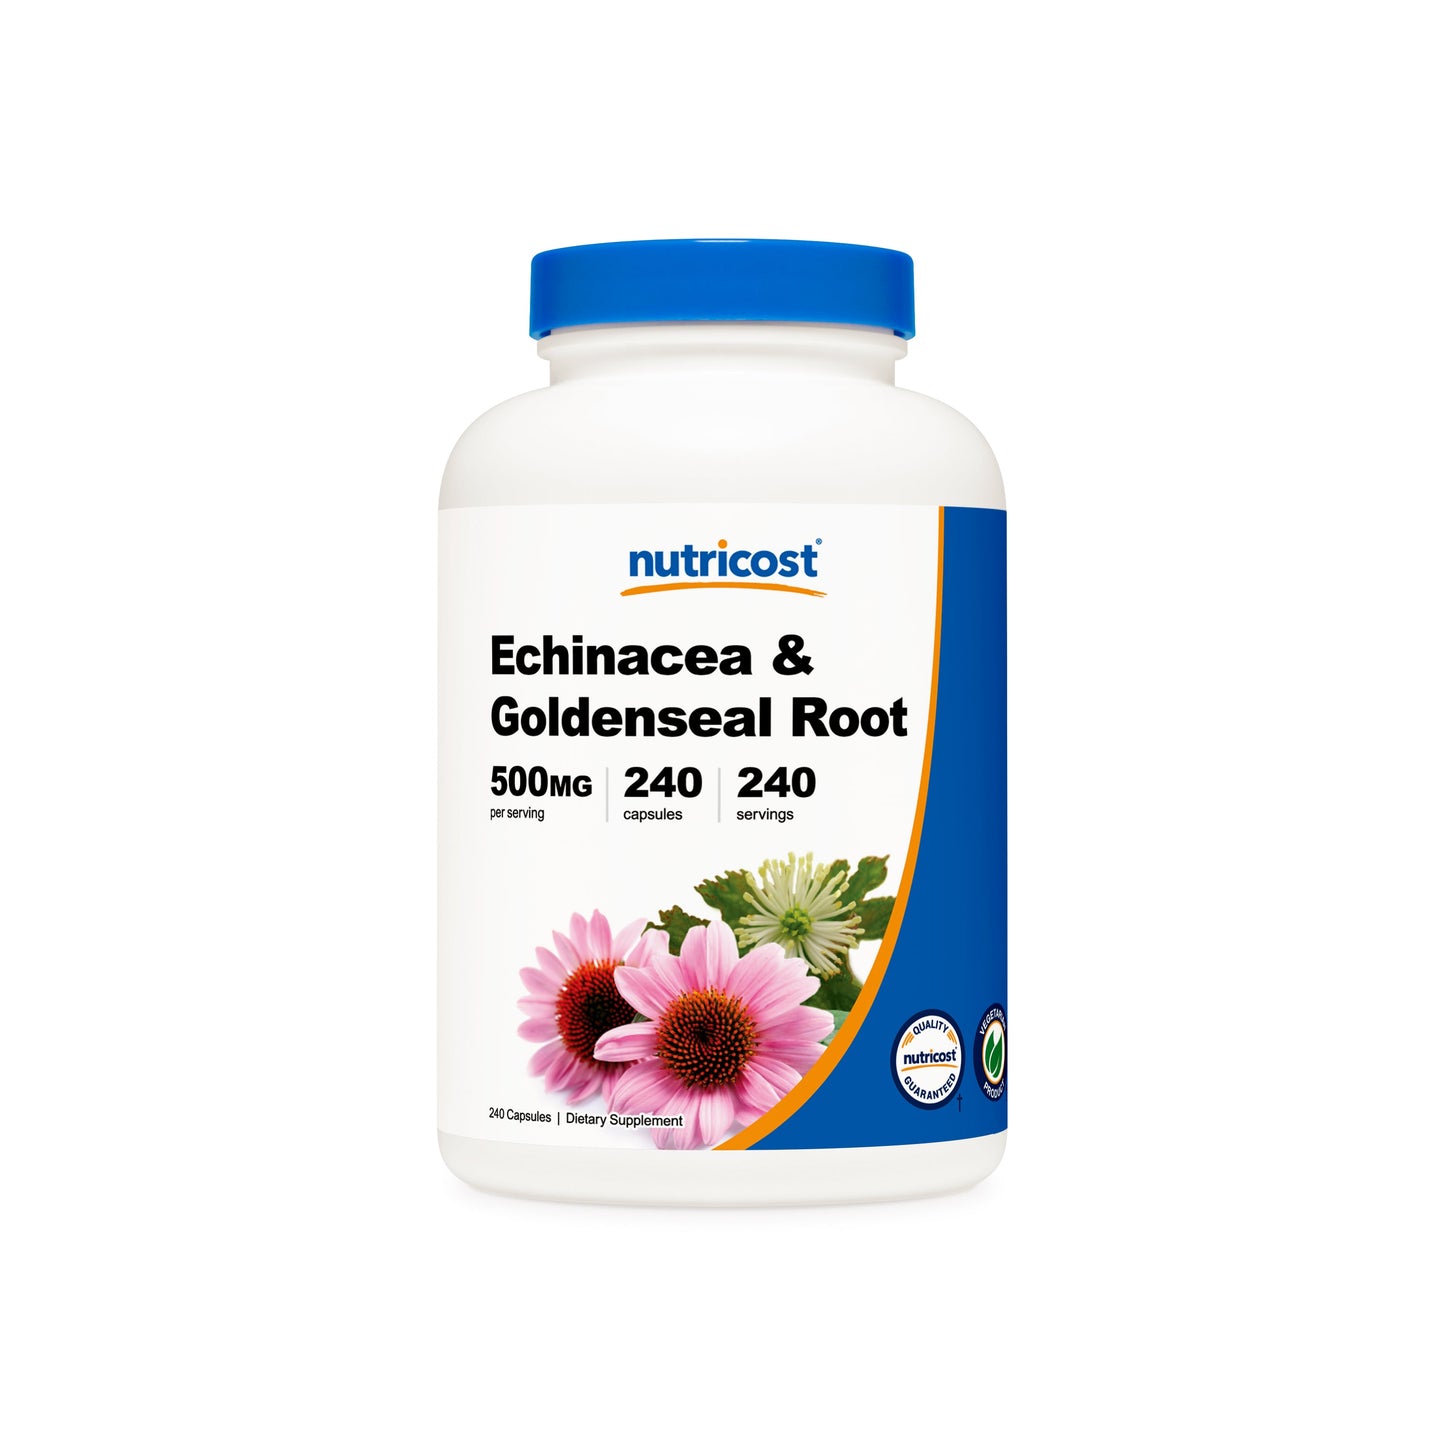 Nutricost Echinacea & Goldenseal Root Capsules